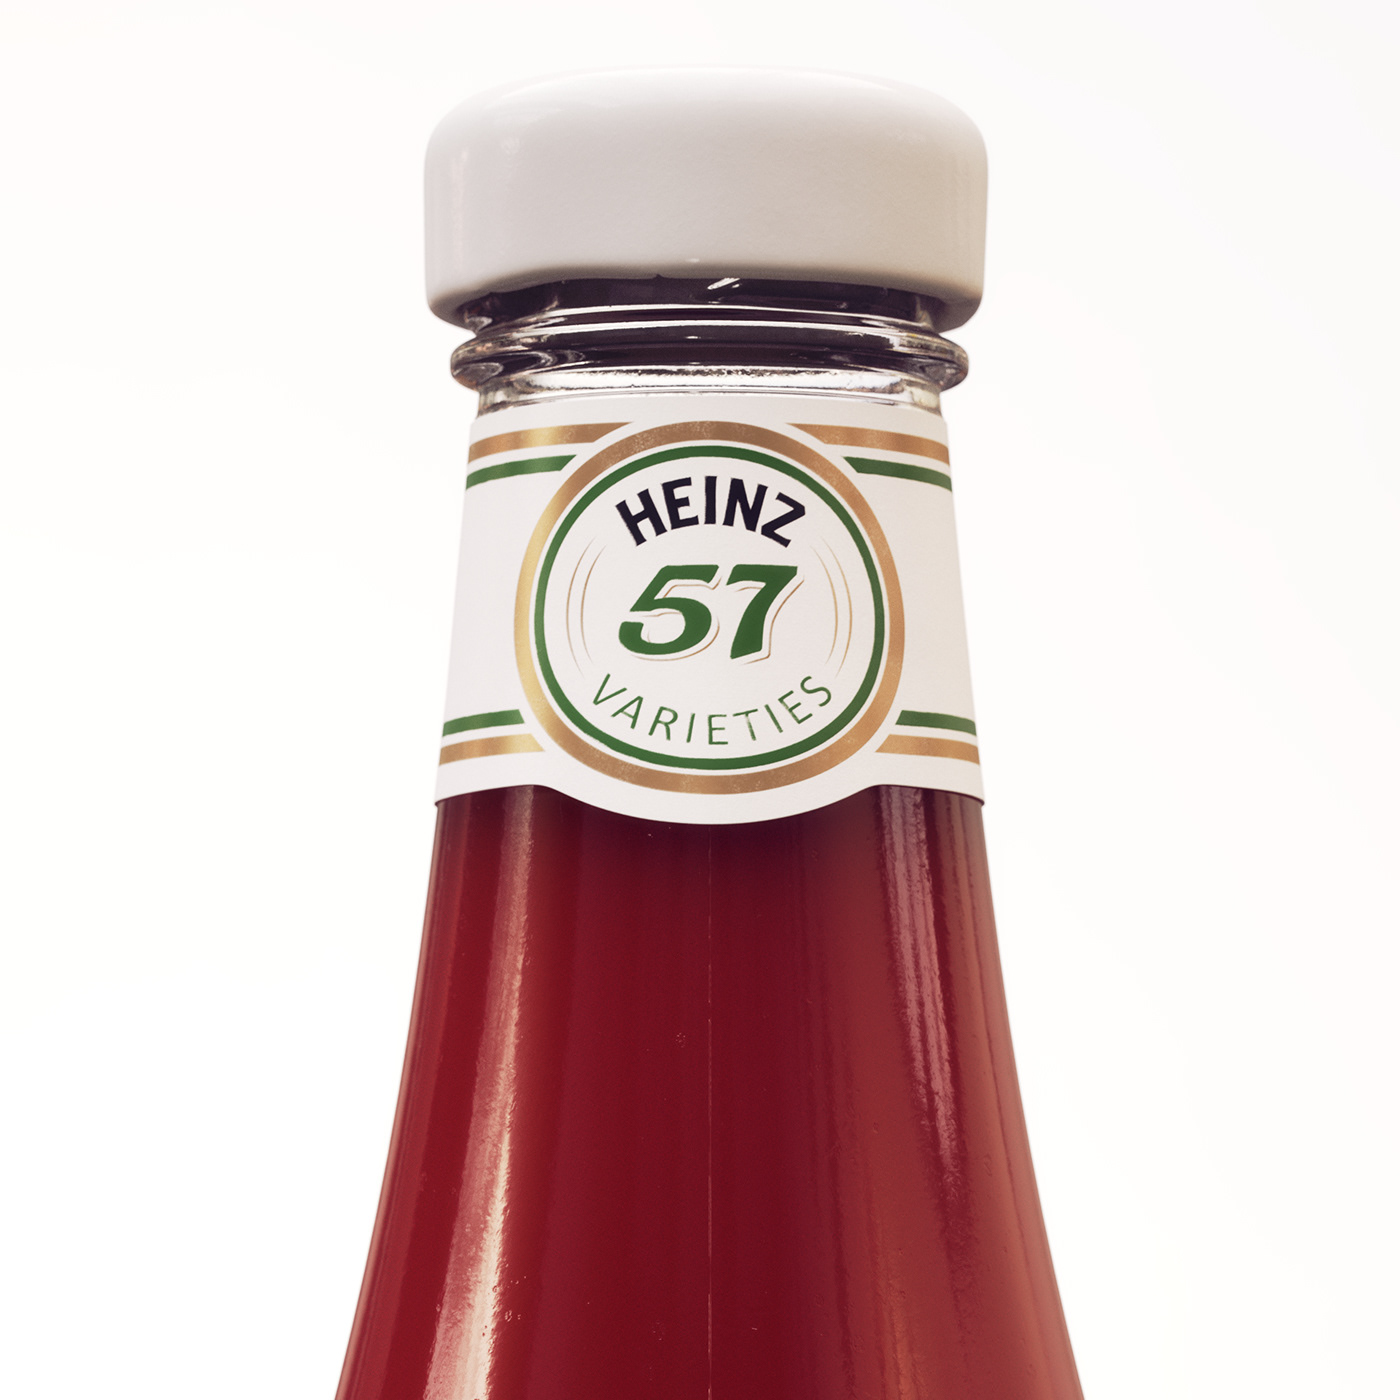 heinz bottle ketchup CGI vray vray next gpu shading lighting